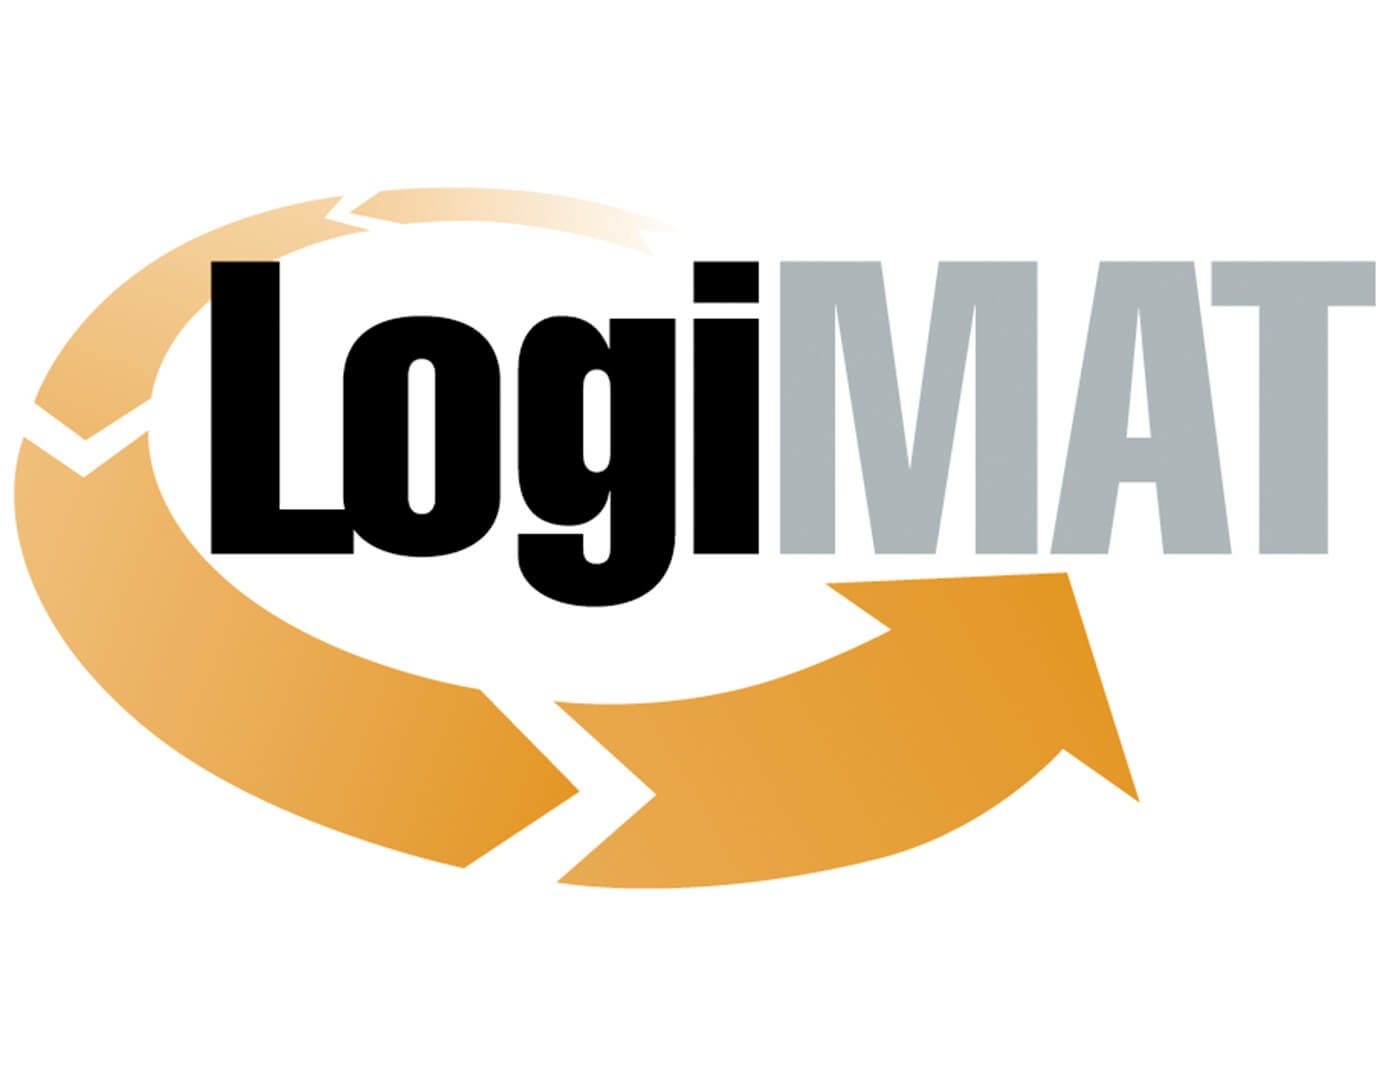 Logo Logimat